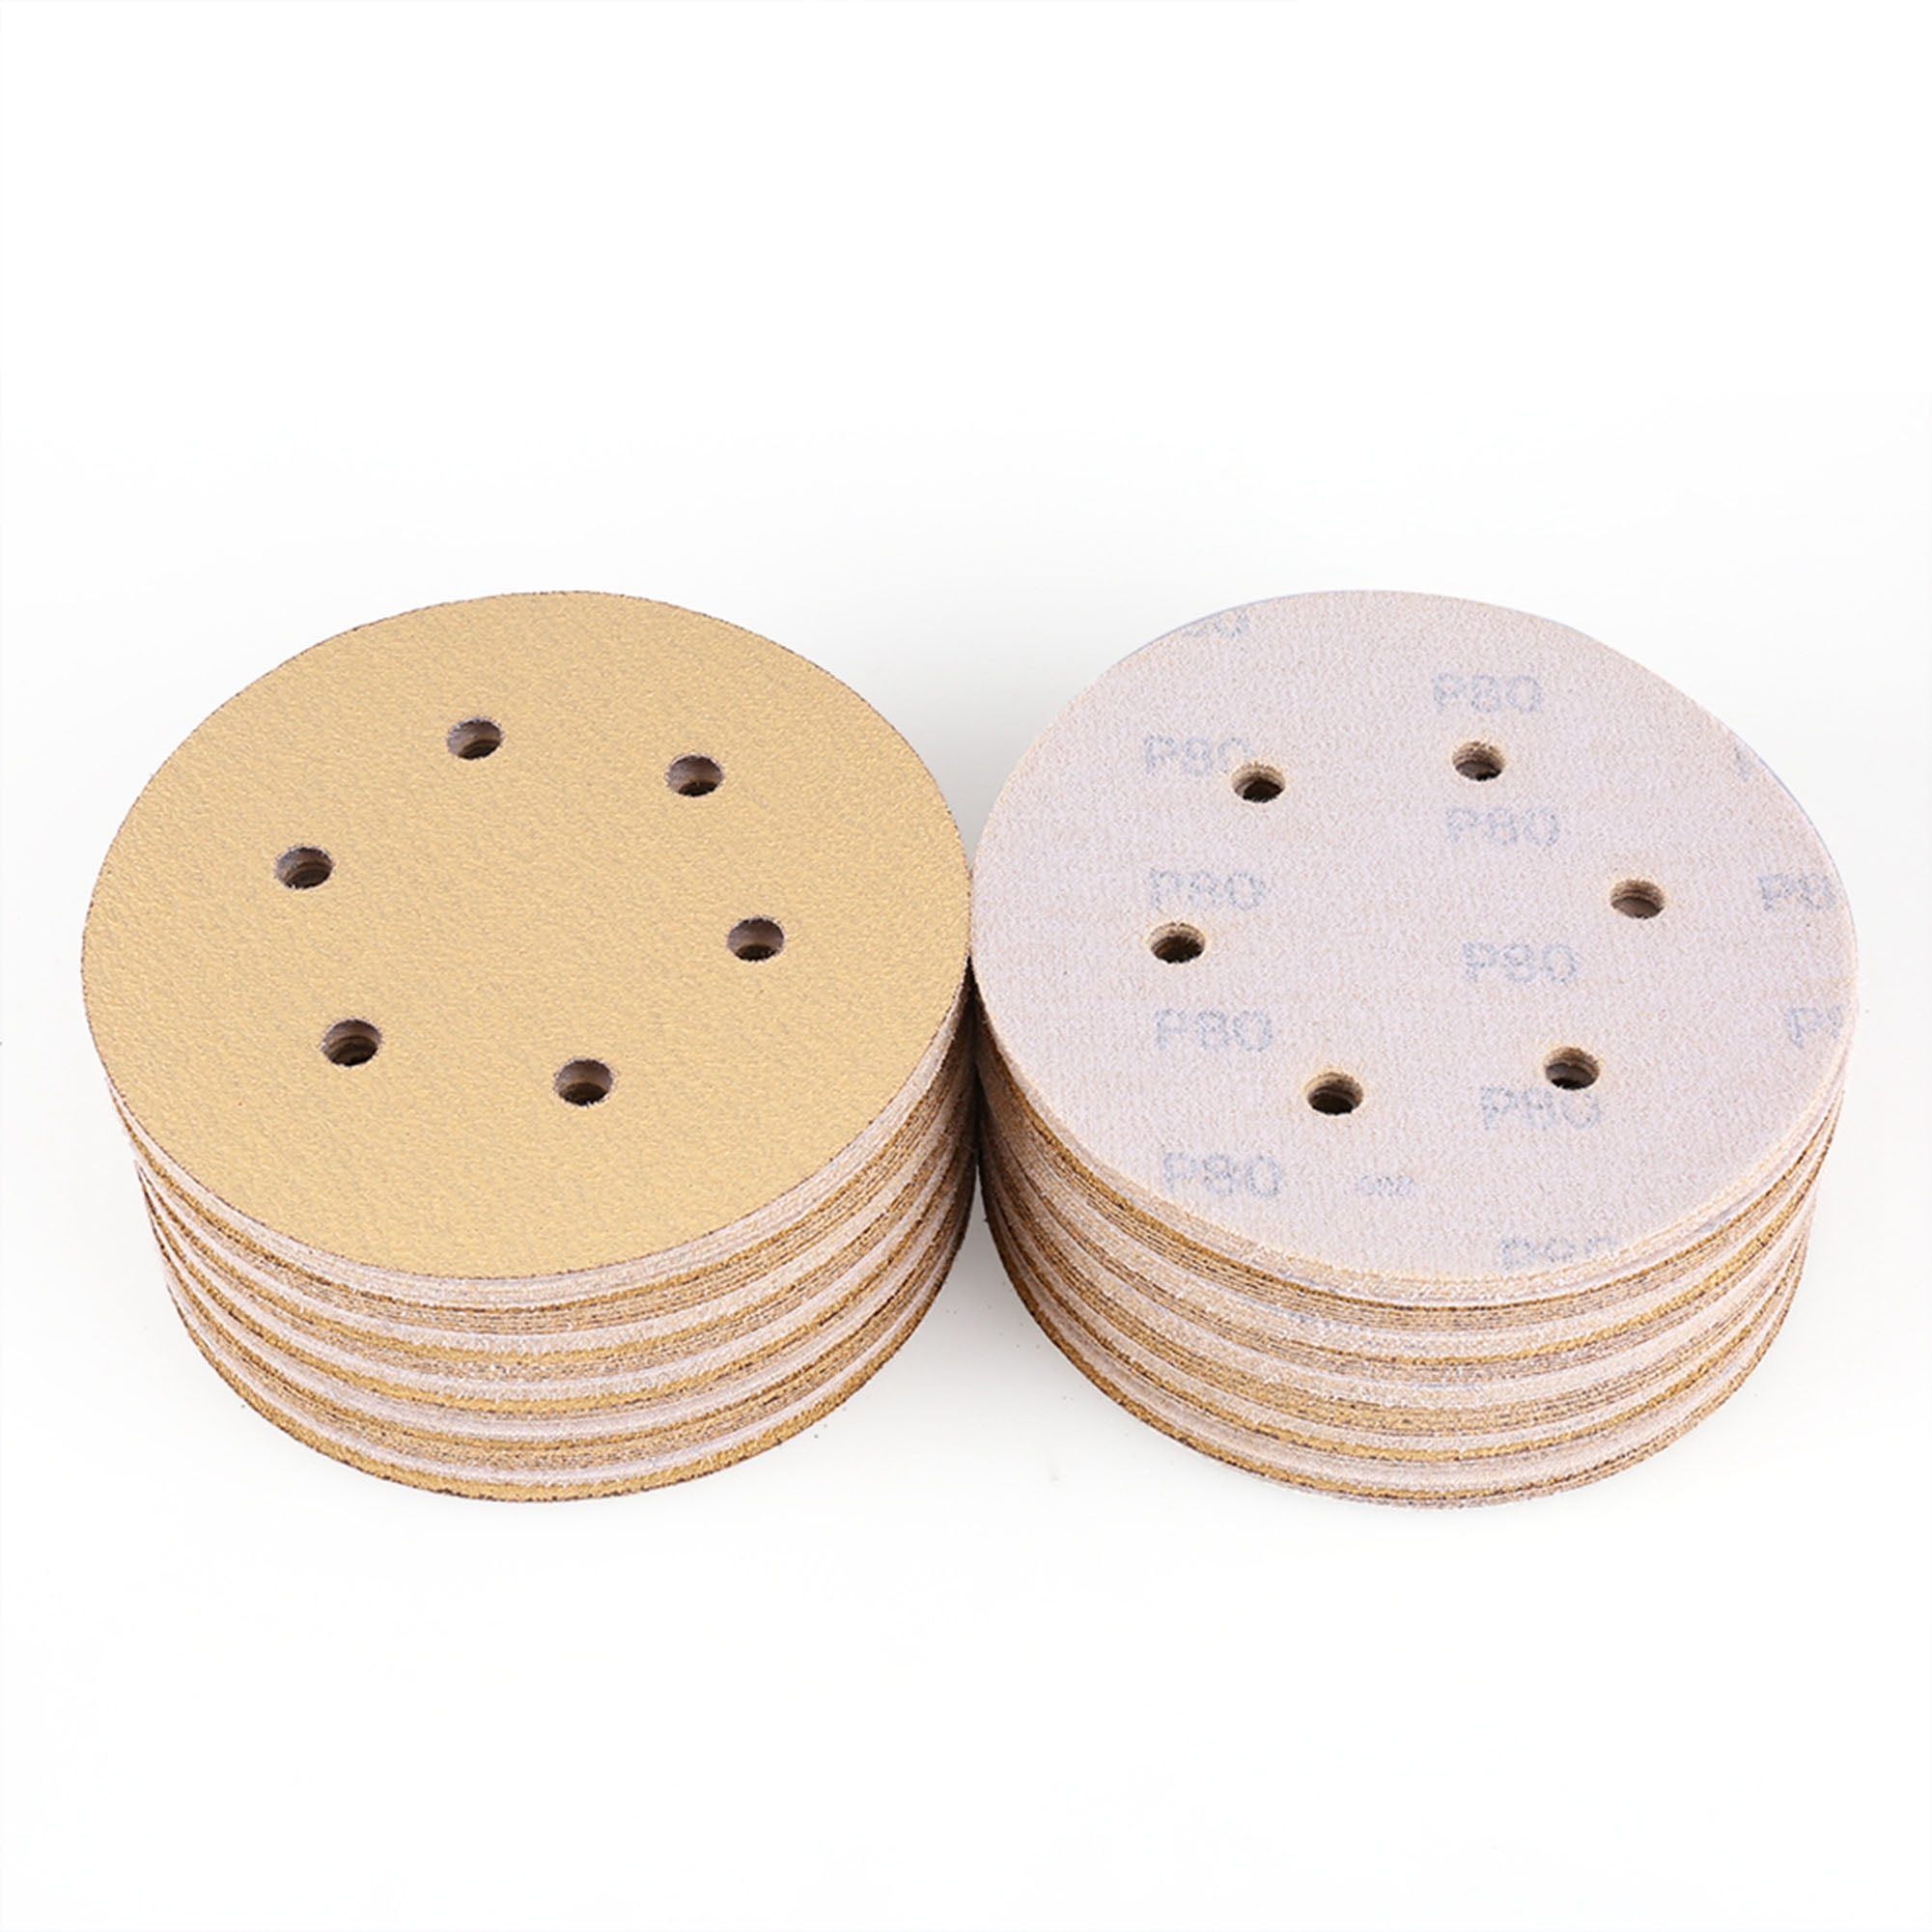 100pcs 6in/150mm 80-240Grit Sanding Discs Pads Round Flocking Sandpaper Pack Lot 